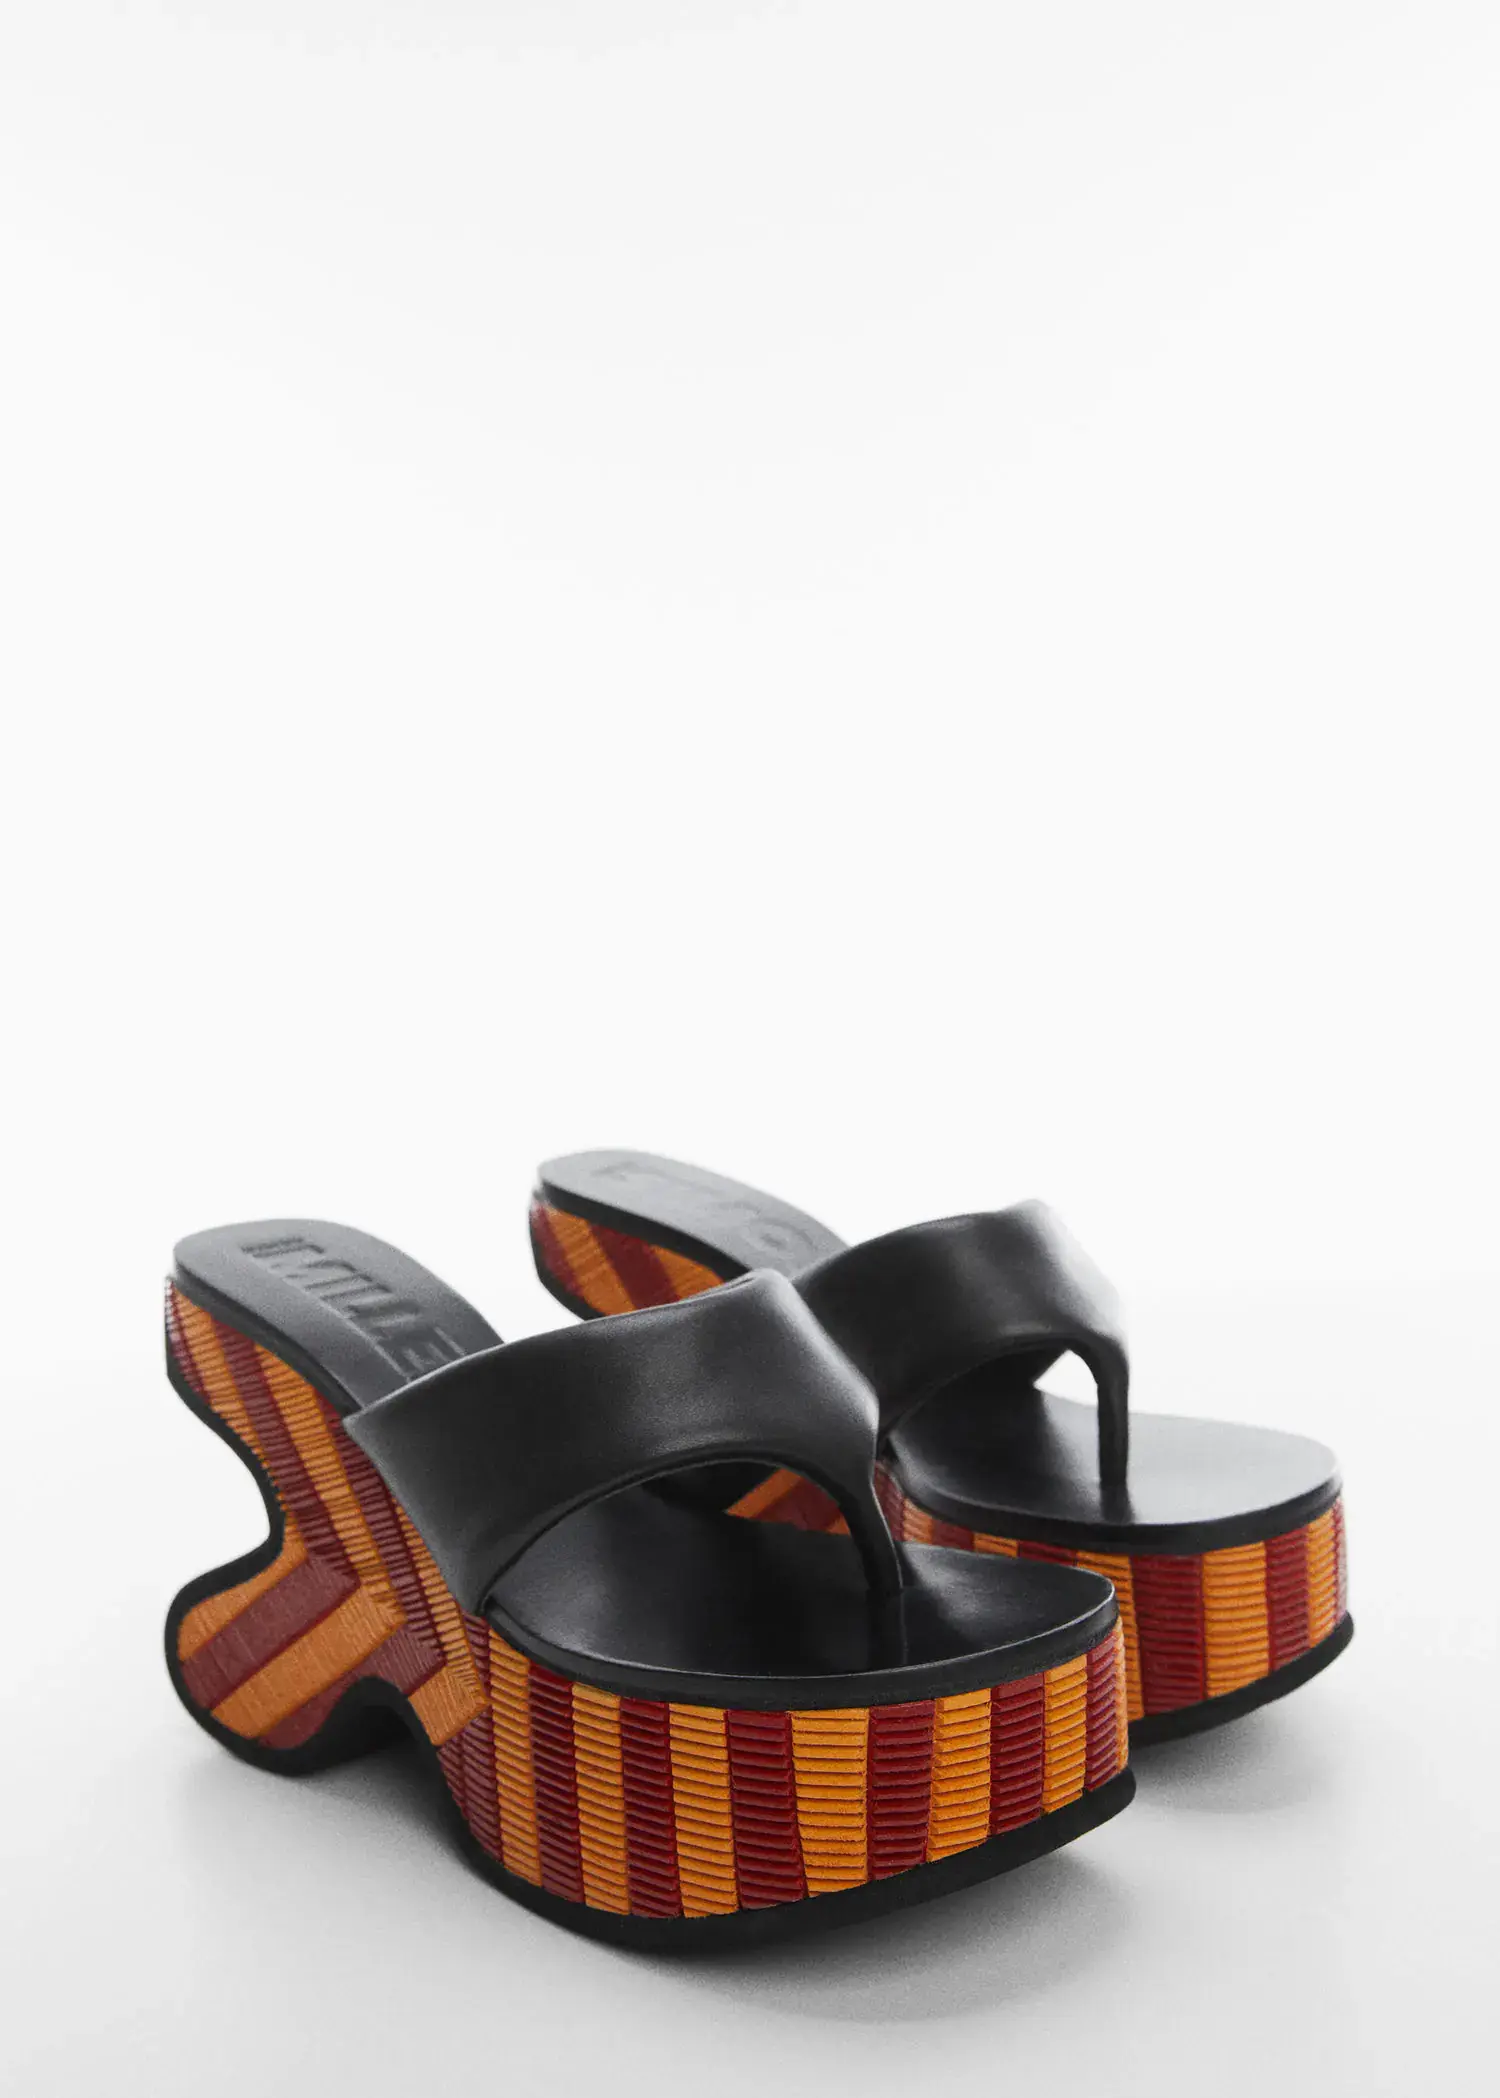 Mango Irregular leather platform sandals. a pair of black and orange sandals on a white surface. 